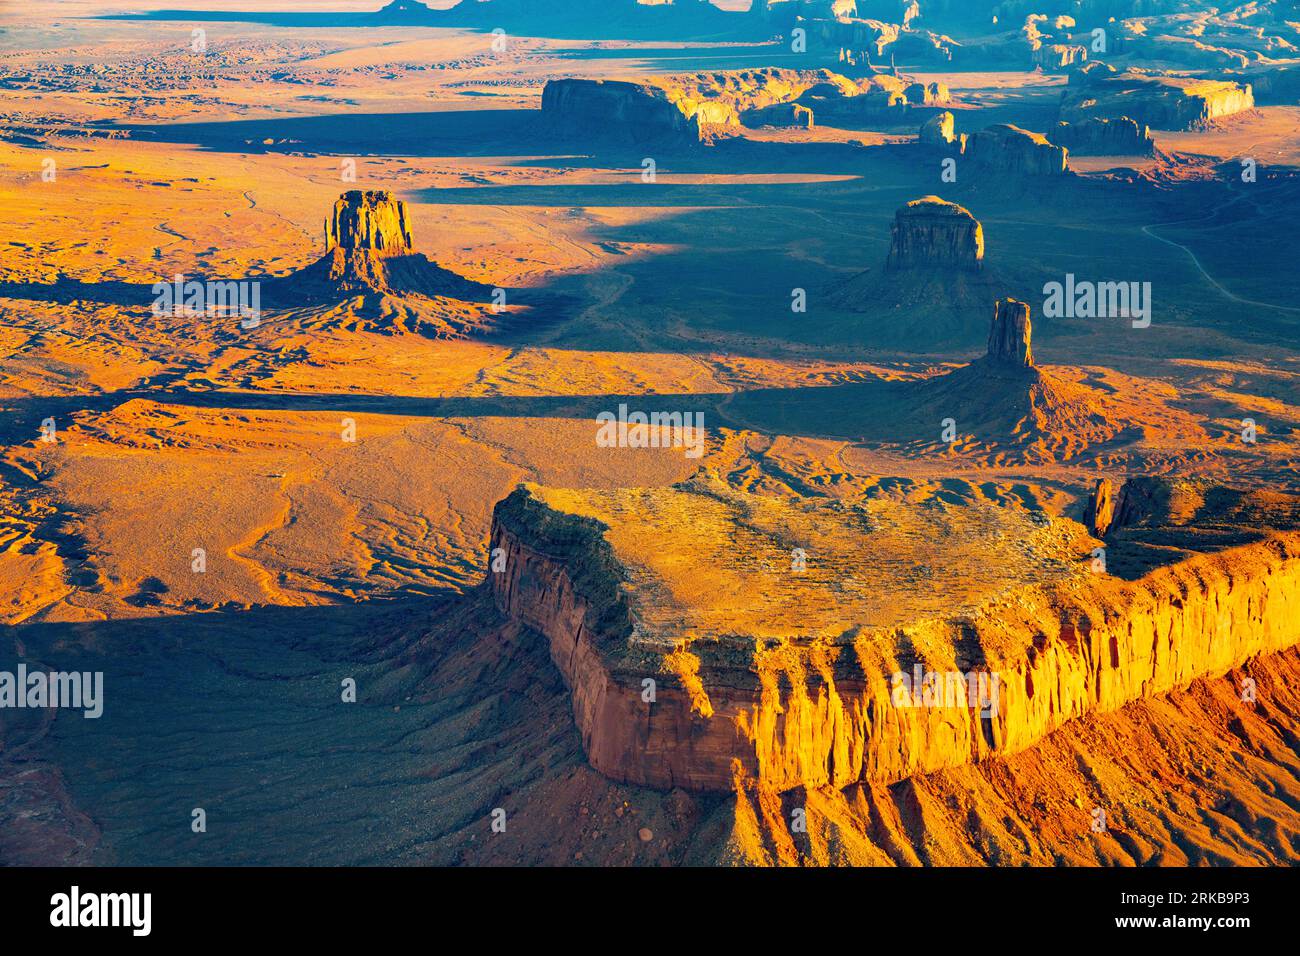 Totem Pole and Yeibichai Rocks,  Monument Valley Tribal Park,  Arizona,  Navajo Reservation Stock Photo